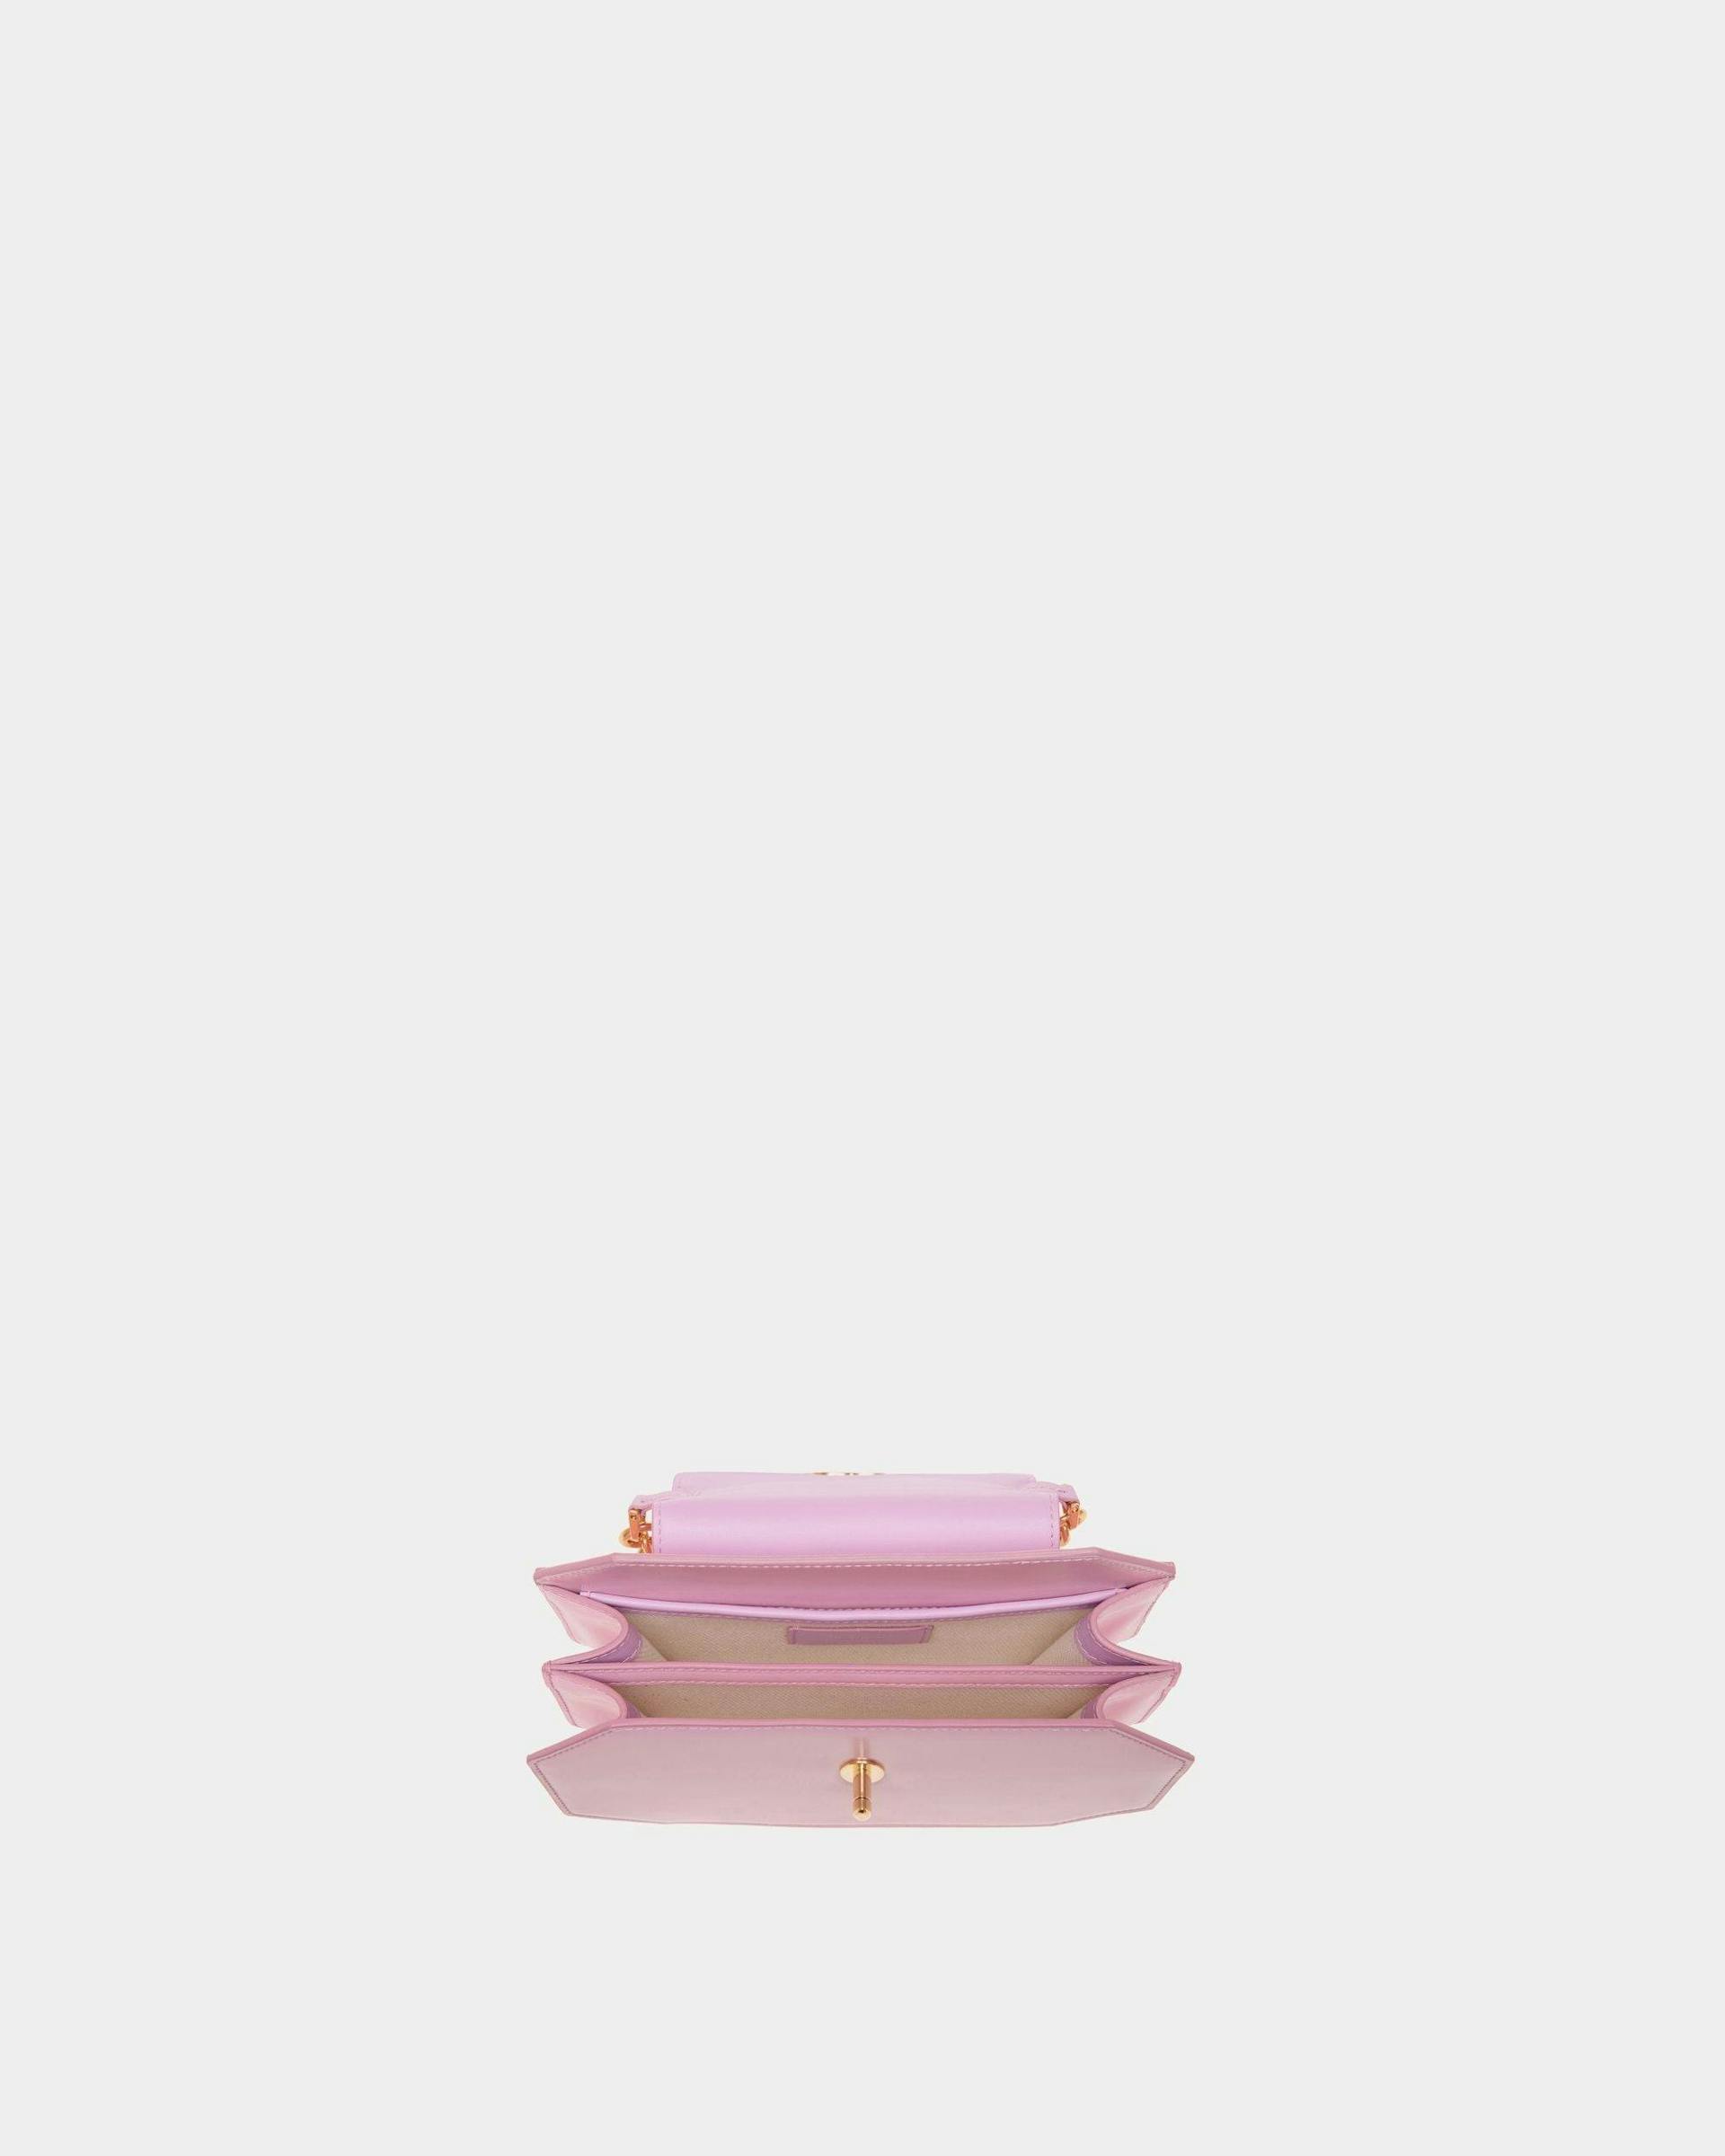 Women's Emblem Mini Bag in Pink Patent Leather | Bally | Still Life Open / Inside